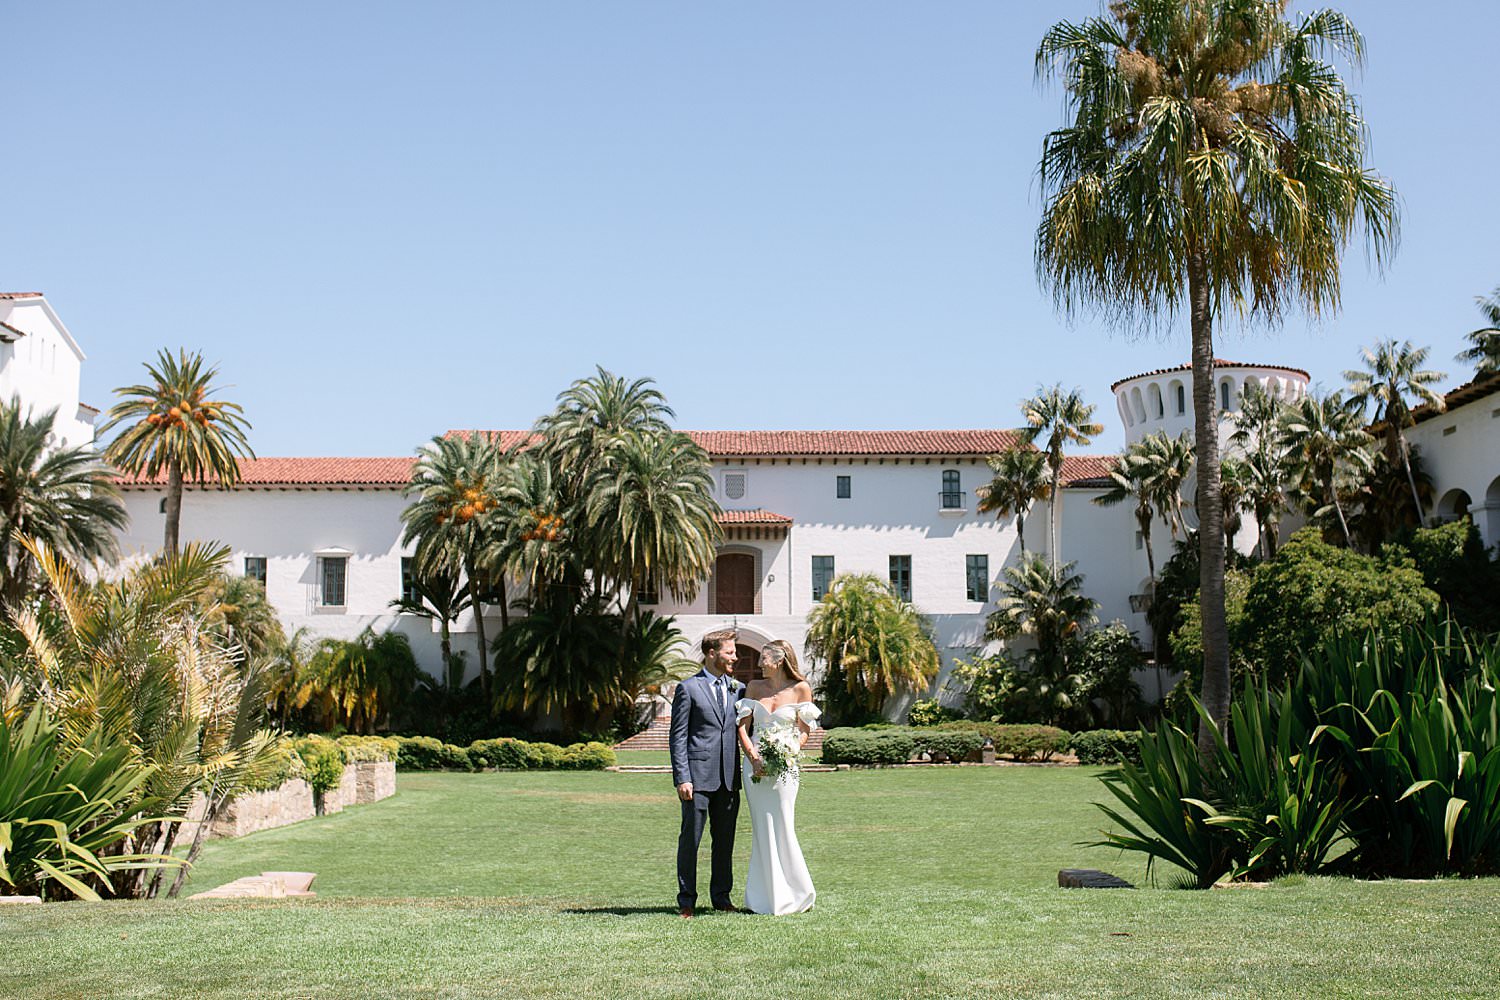 Santa Barbara Courthouse elopement photographer